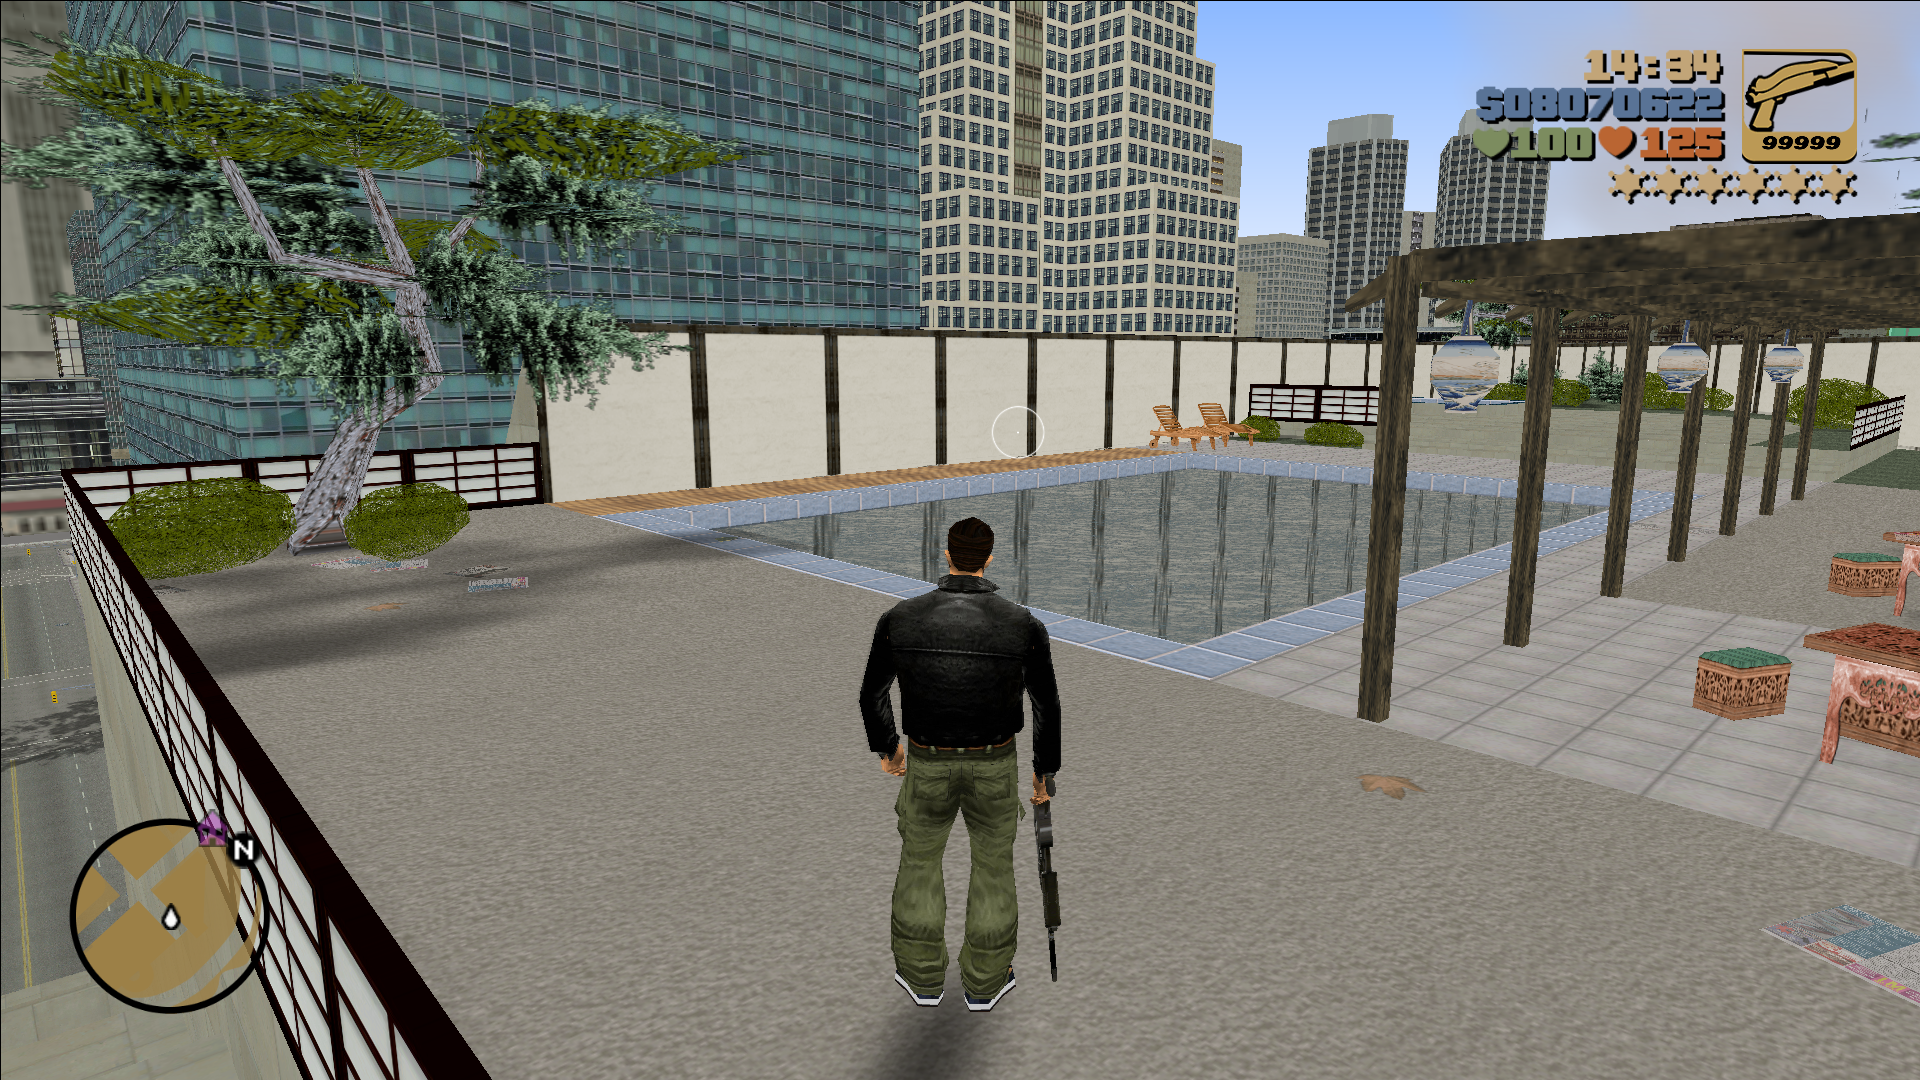 Grand Theft Auto 3 - PC